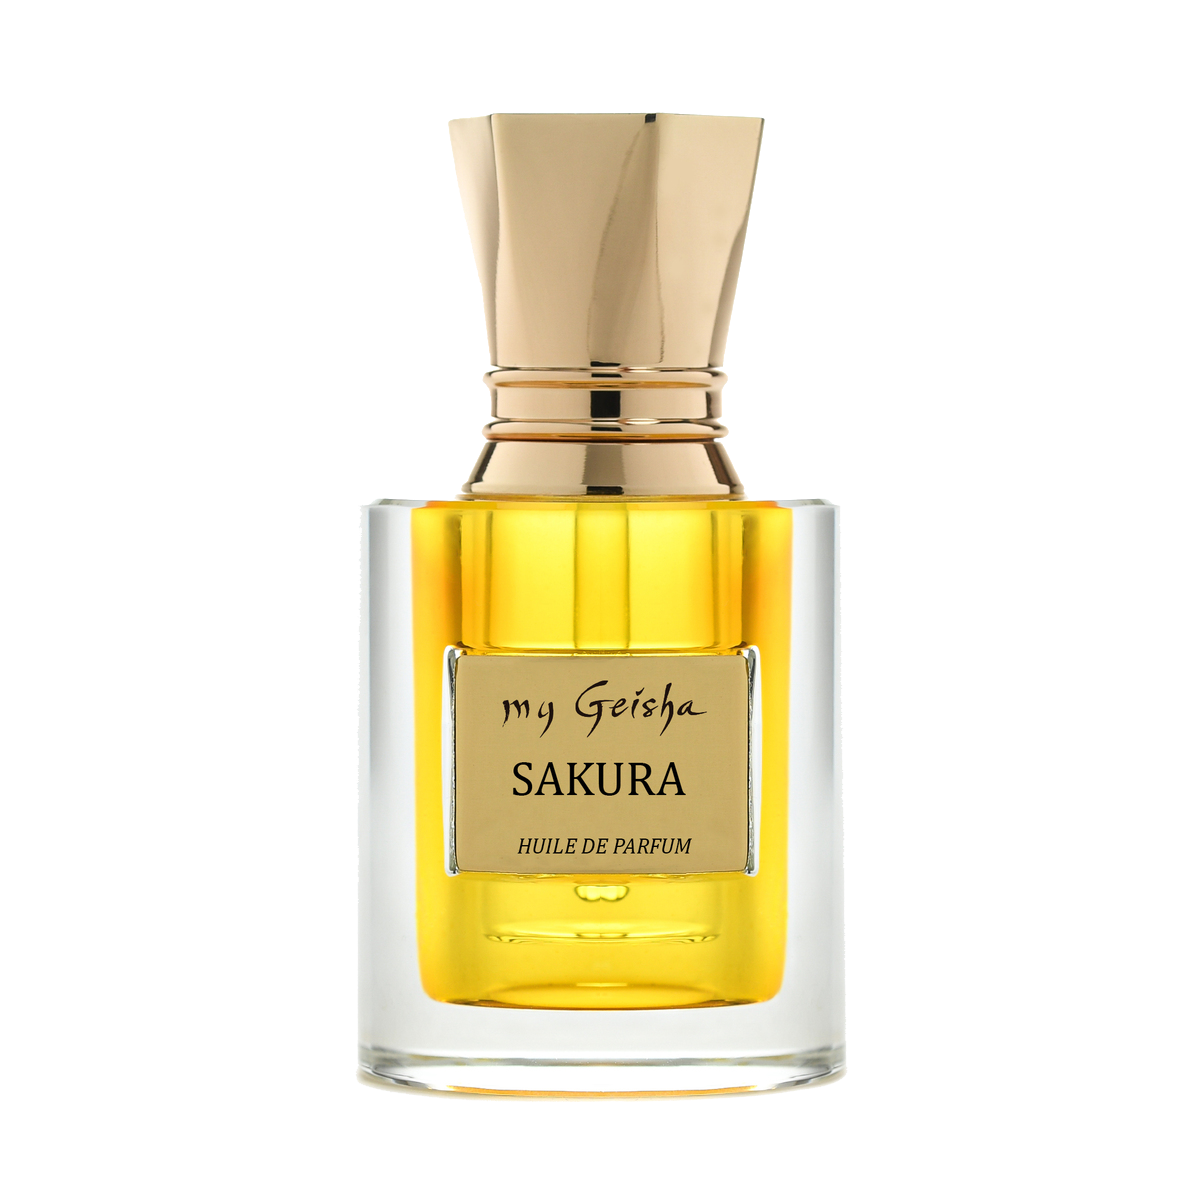 Huile de parfum SAKURA 14 ml, produit artisanal en vente directe en Suisse